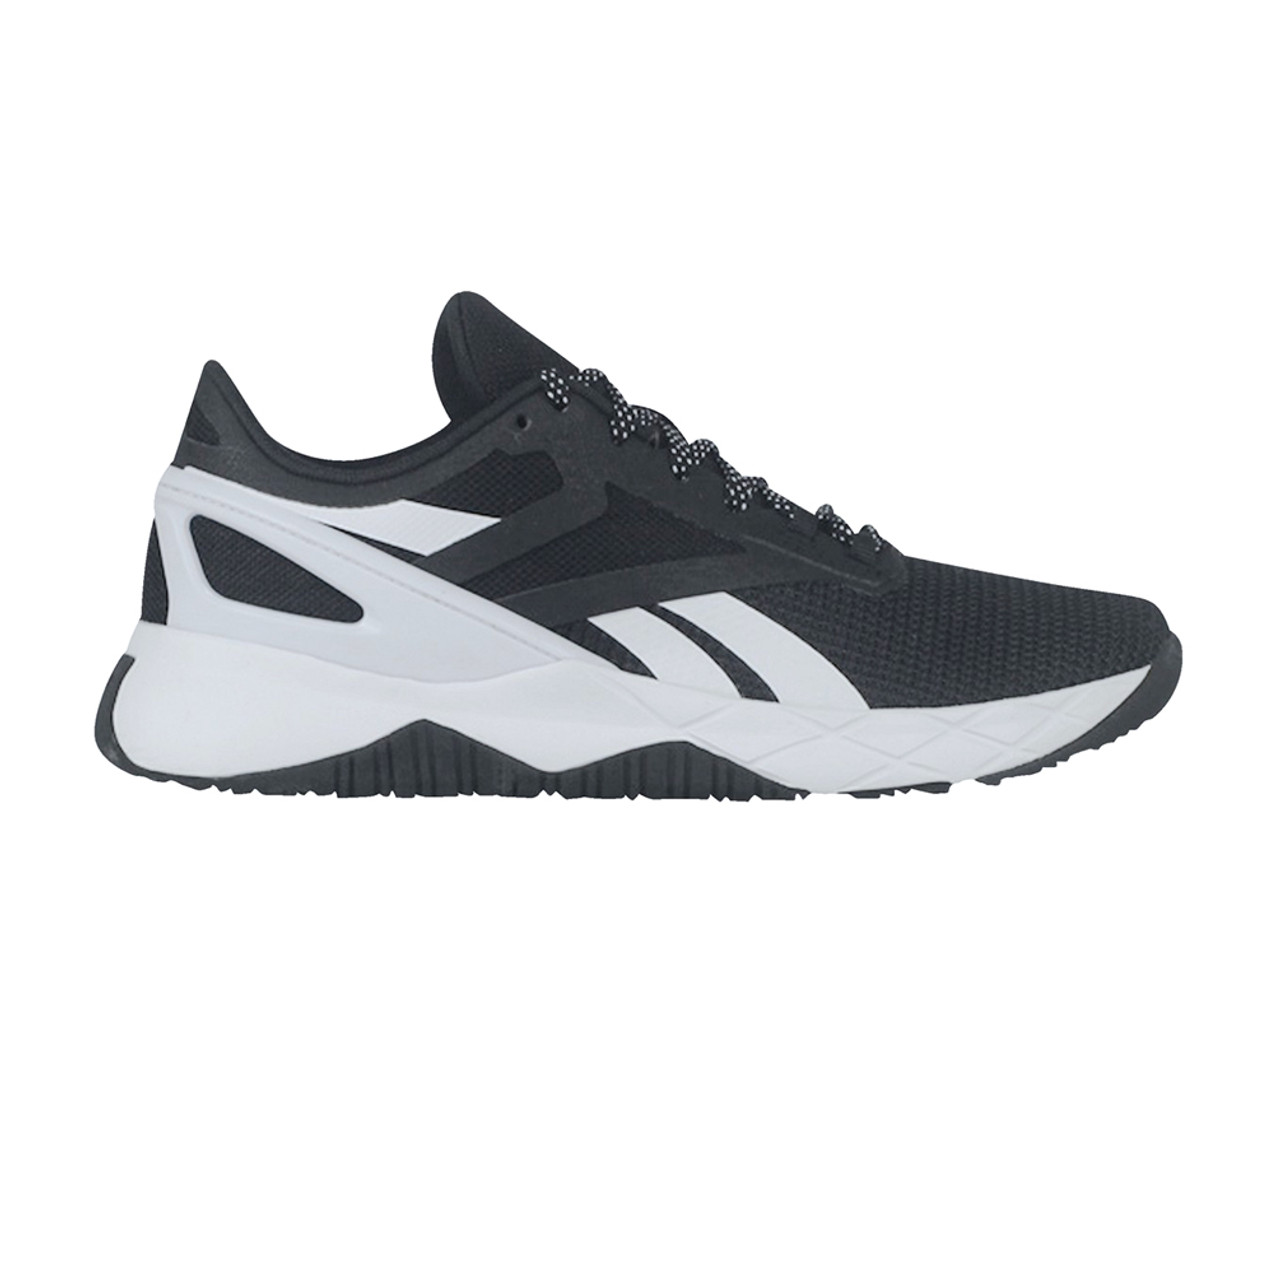 Puerto Legado rumor New Reebok Men's Nanoflex Training Shoe Core Black/White 11 - Black/White |  Discount Reebok Mens Athletic & More - Shoolu.com | Shoolu.com